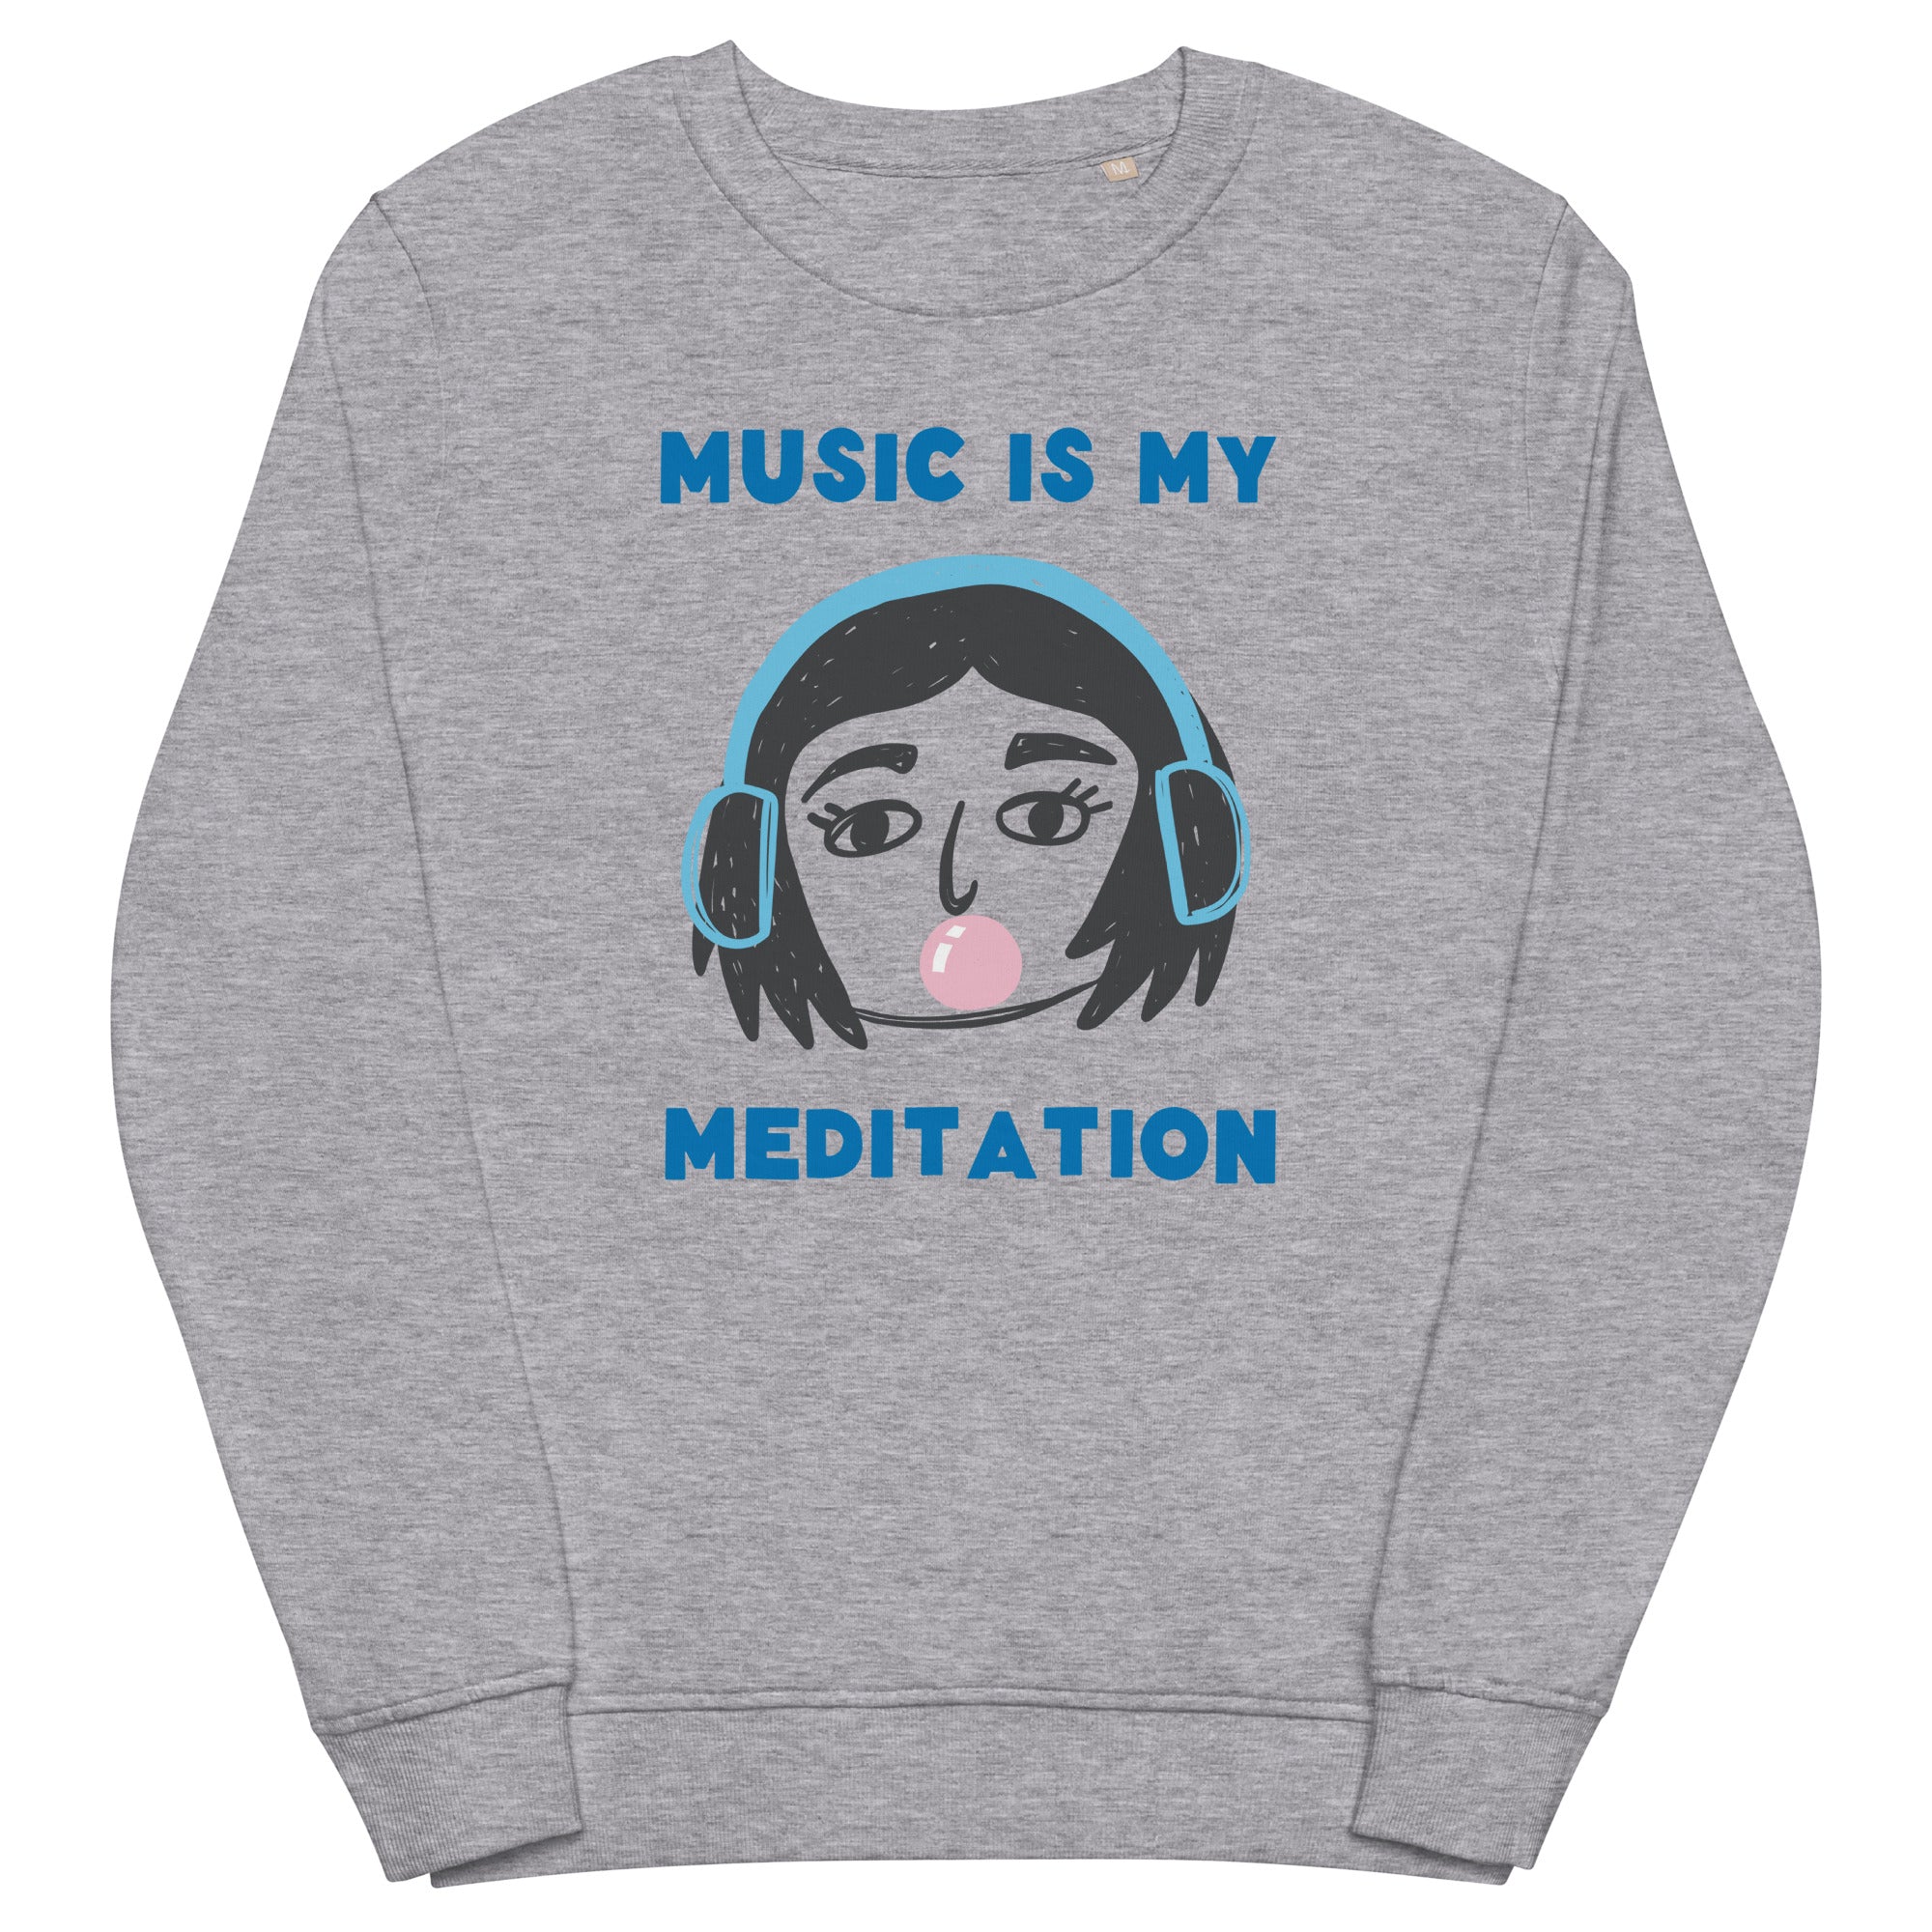 Meditation - Organic/Recycled Sweatshirt